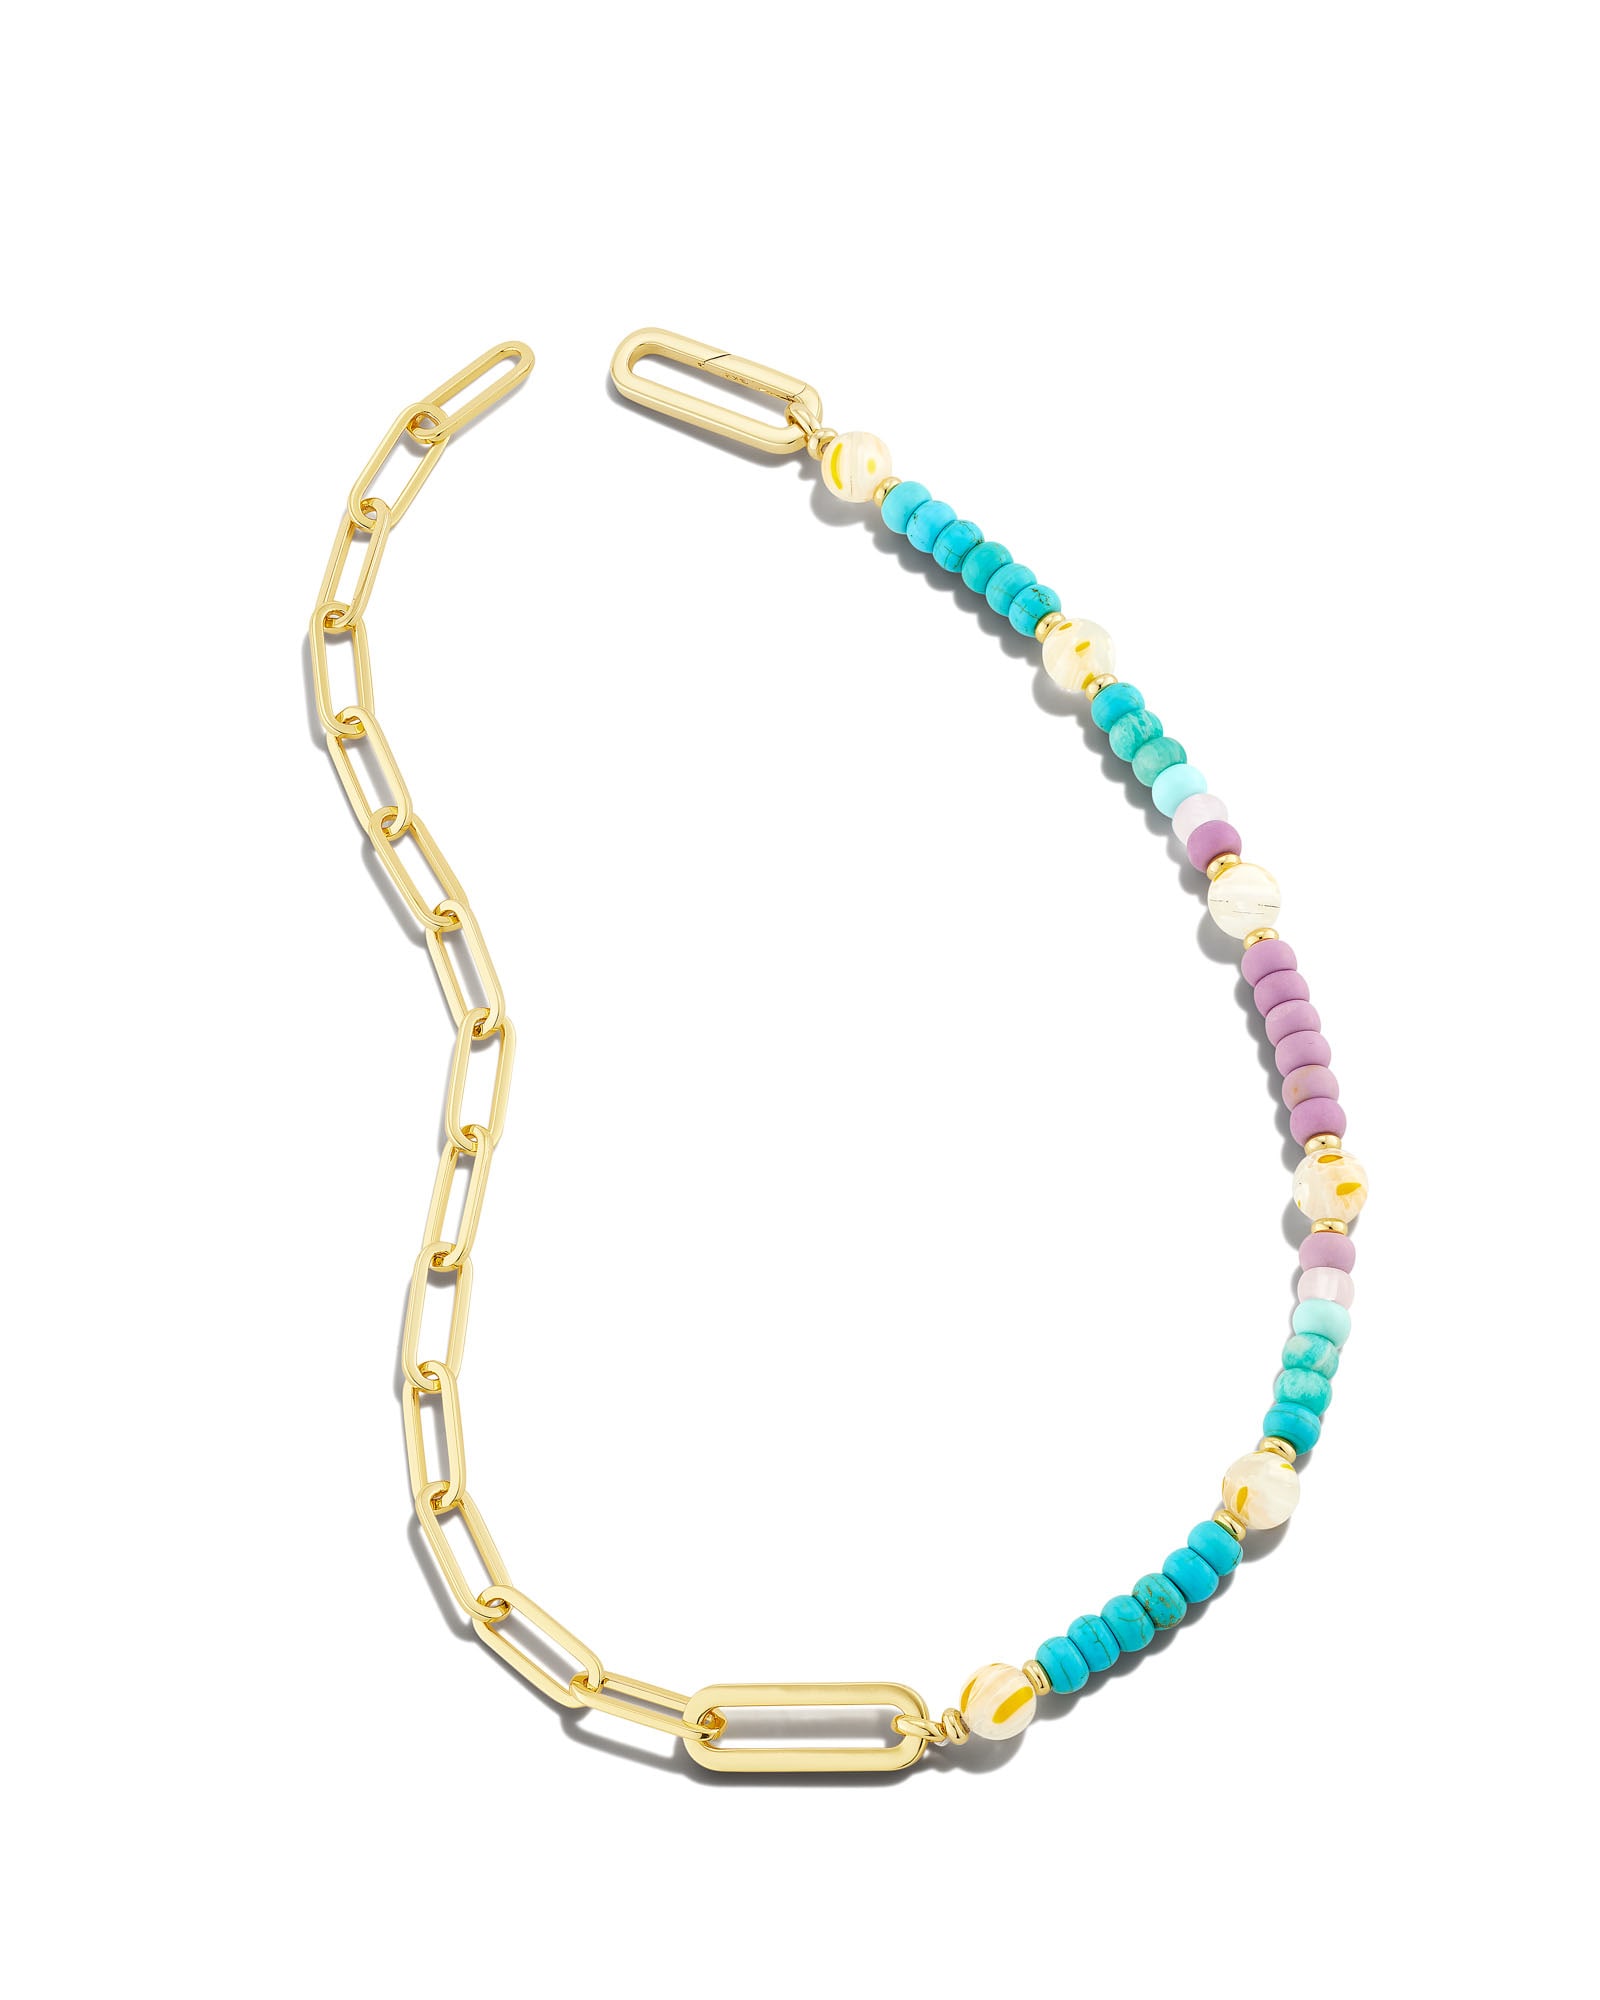 Ashton Gold Half Chain Necklace in Pastel Mix